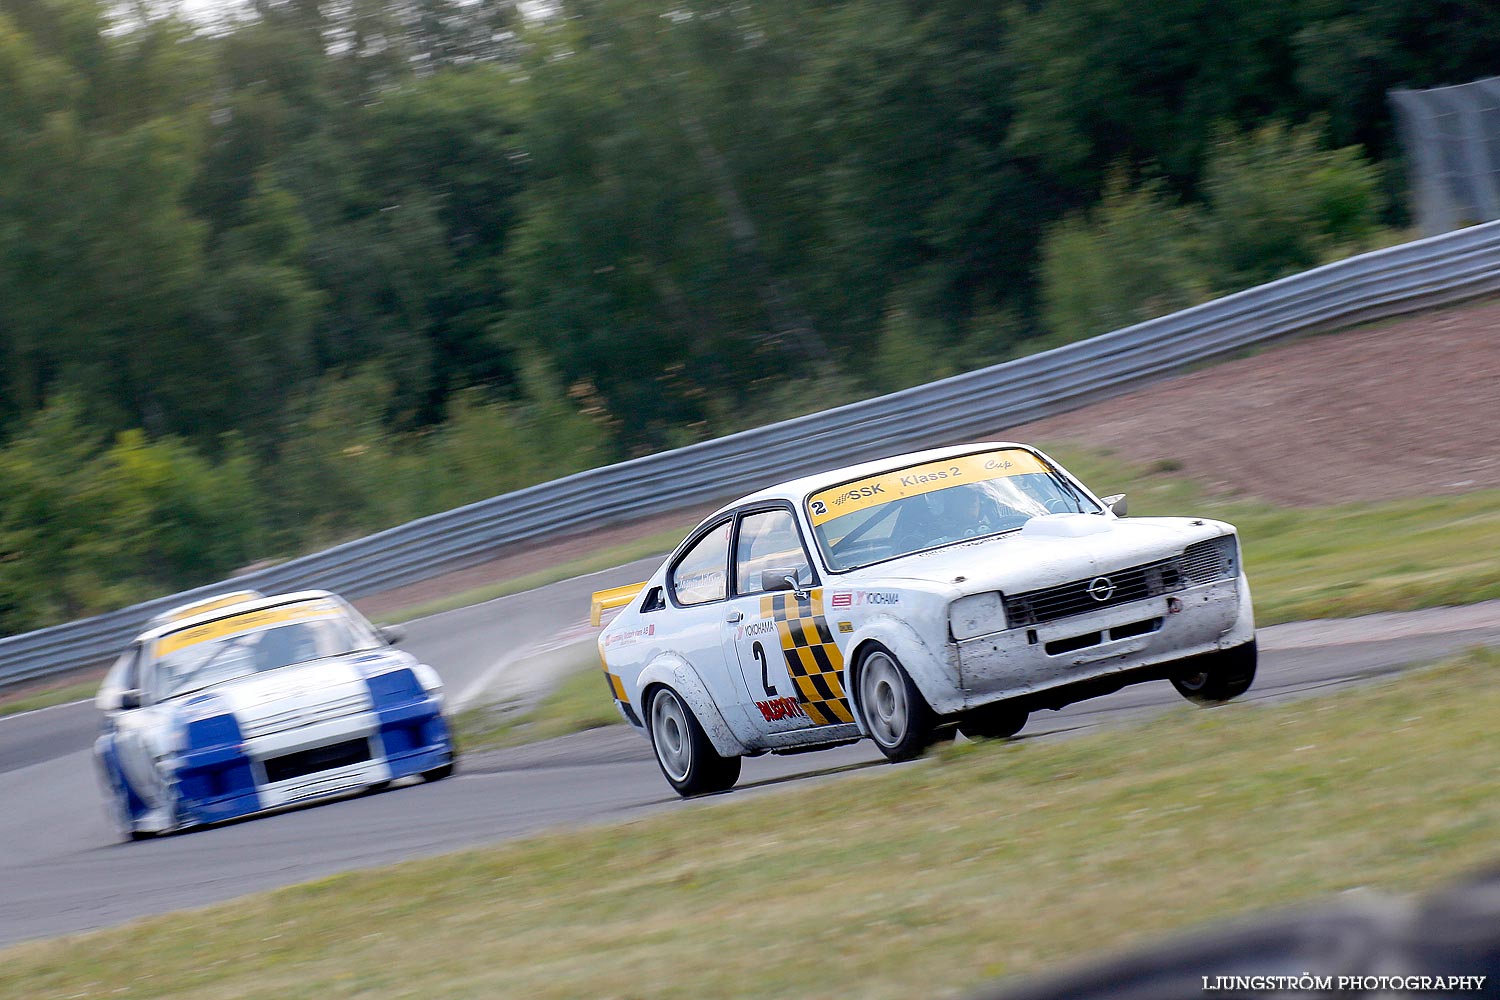 SSK Raceweek,mix,Kinnekulle Ring,Götene,Sverige,Motorsport,,2014,90538